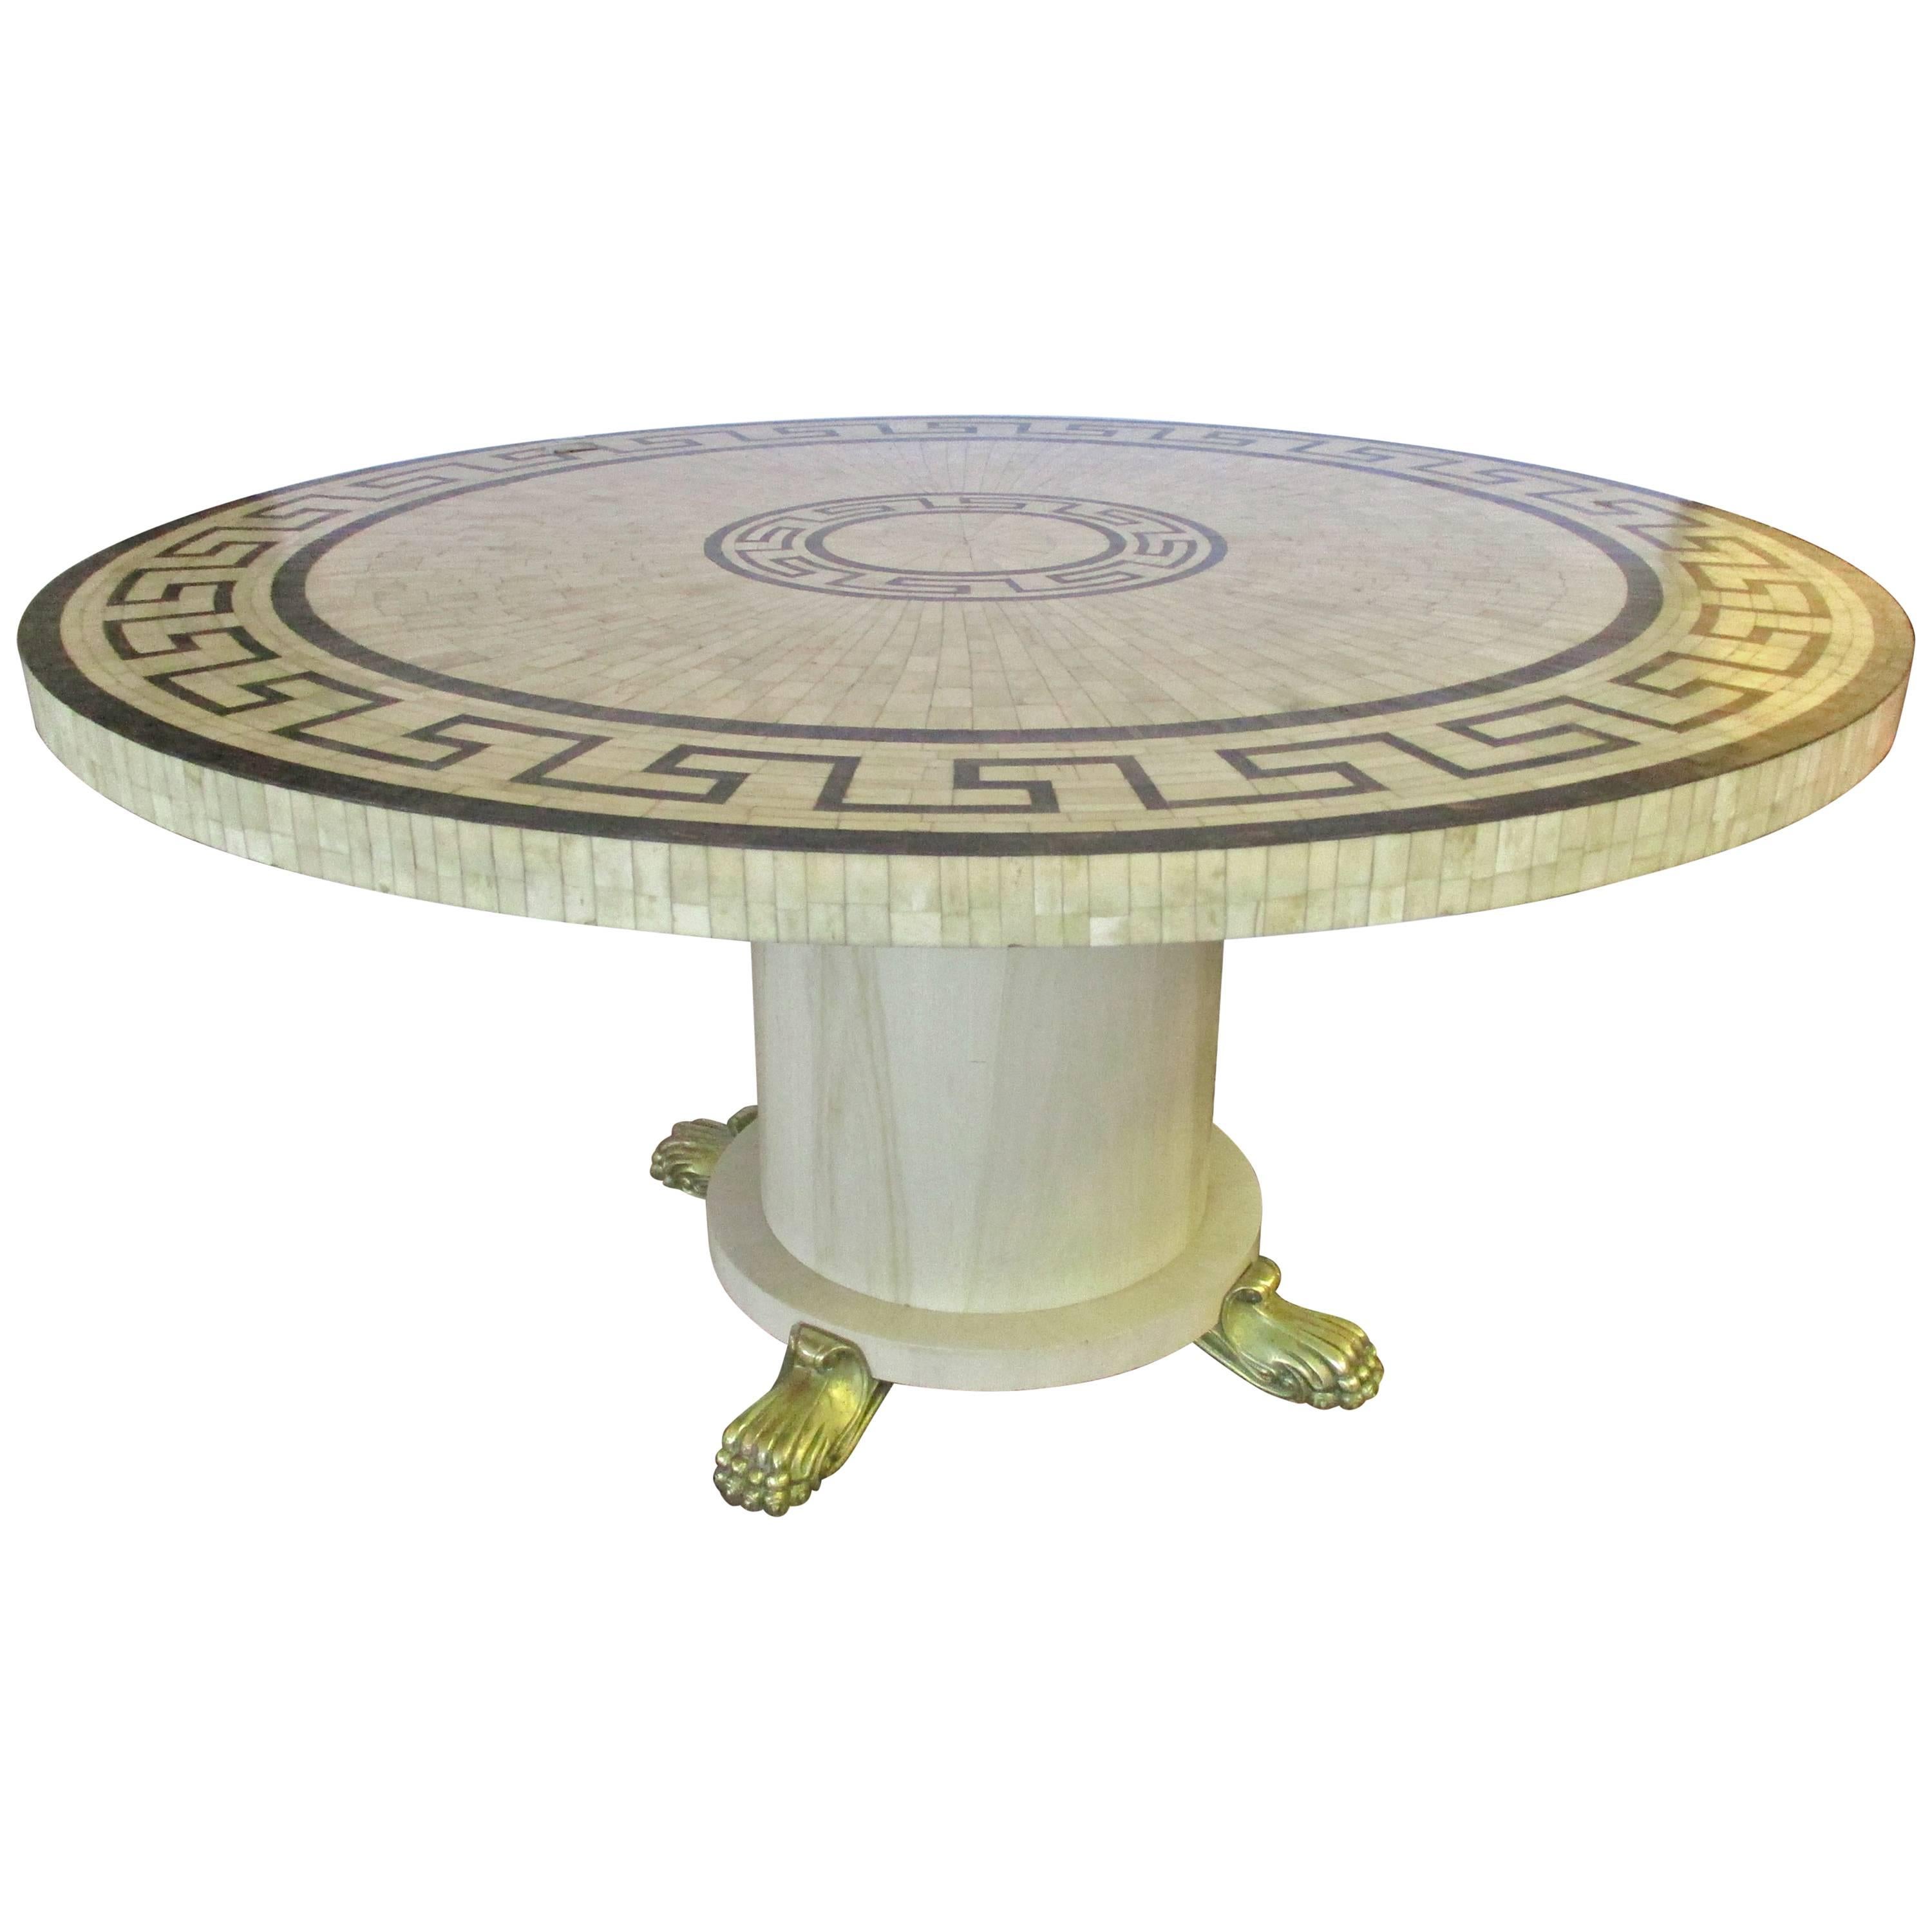 Maitland Smith Bone Inlay Round Table with Greek Key Design